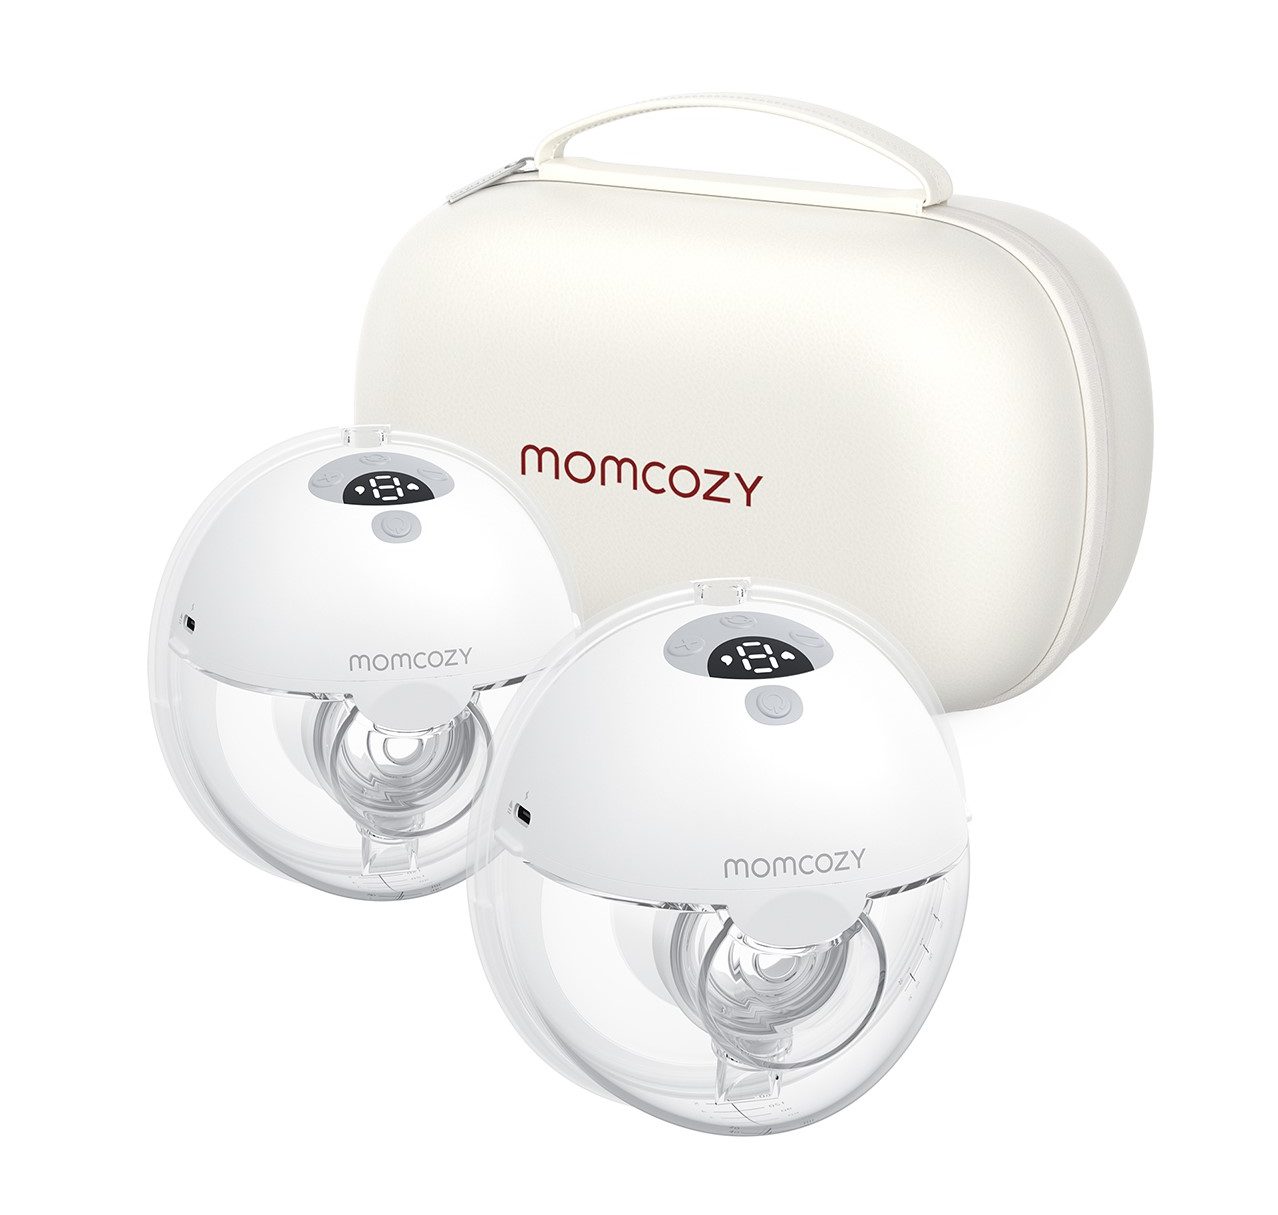 Momcozy S9 Pro Vs S12 Pro VS M5 wearable breast pumps! Which one